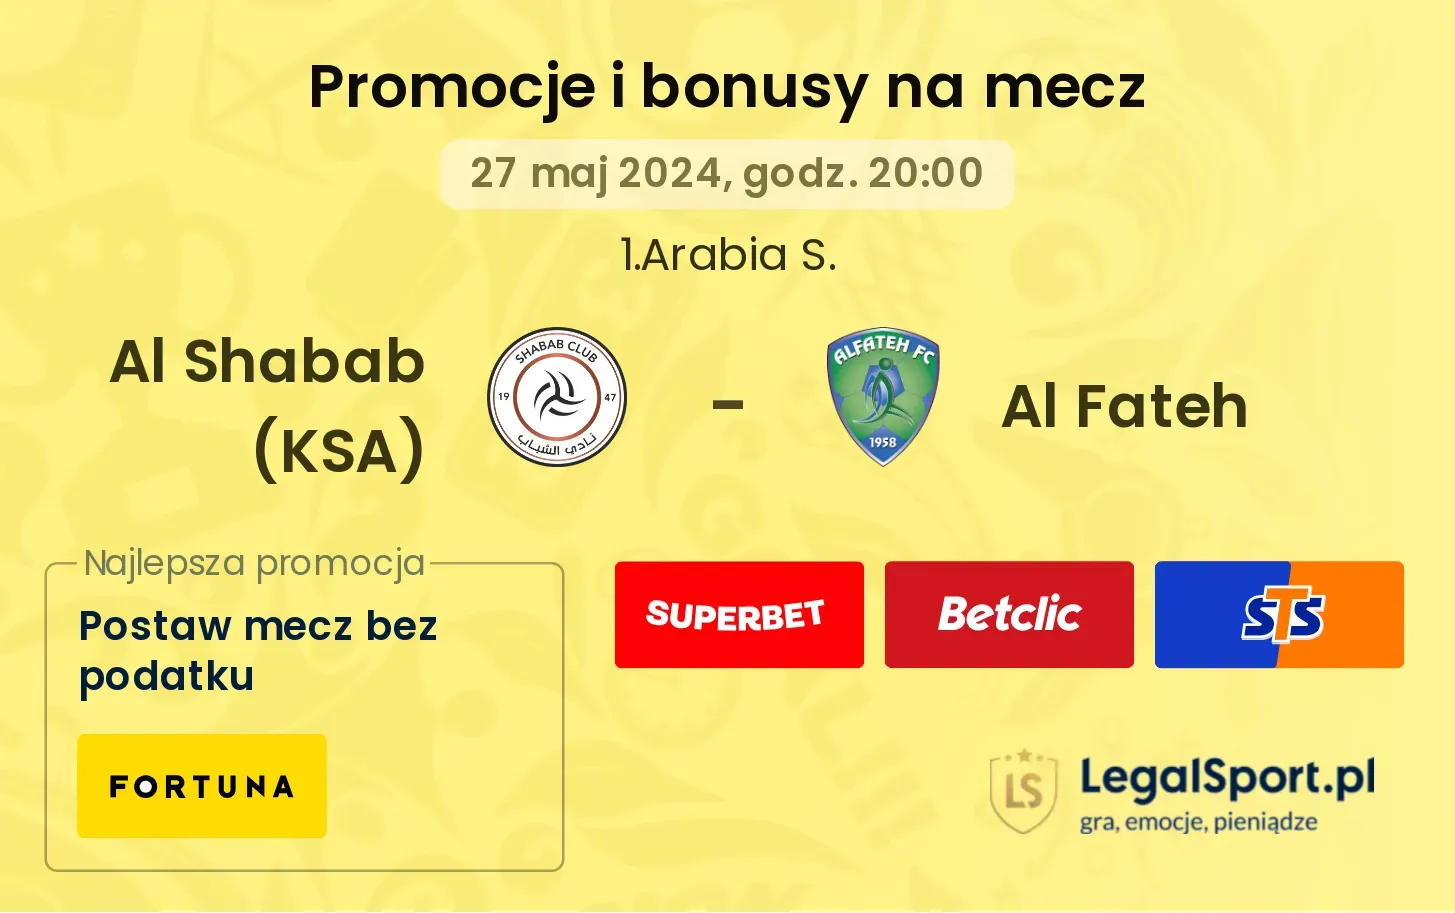 Al Shabab (KSA) - Al Fateh promocje bonusy na mecz